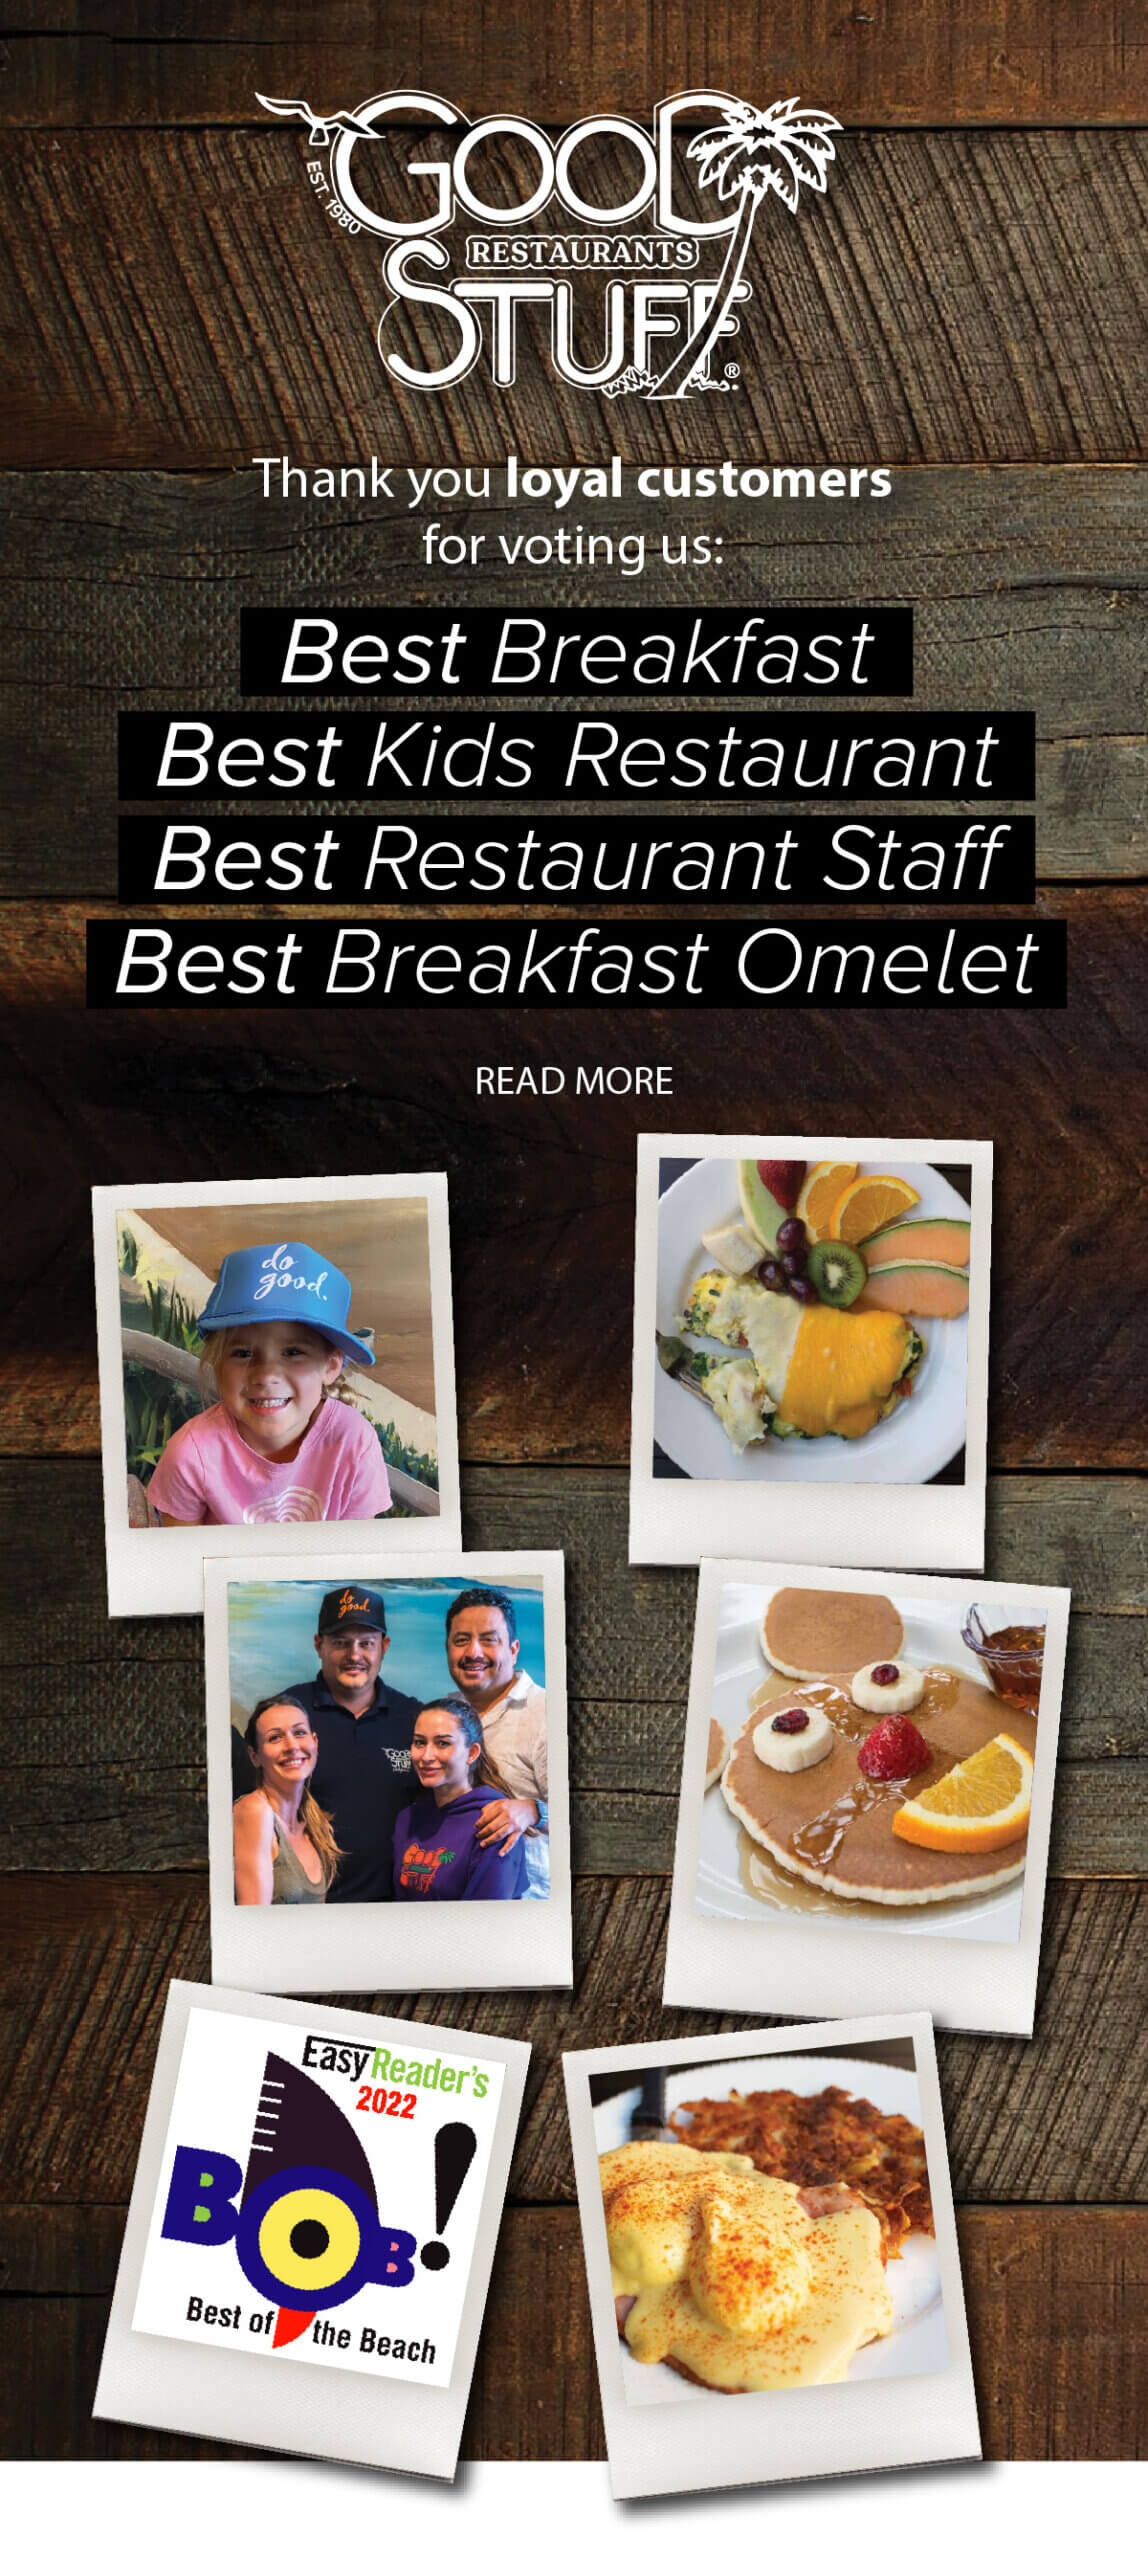 thank you loyal customers for voting us: best breakfast, best kids restaurant, best restaurant staff, best breakfast omelet. Read More.